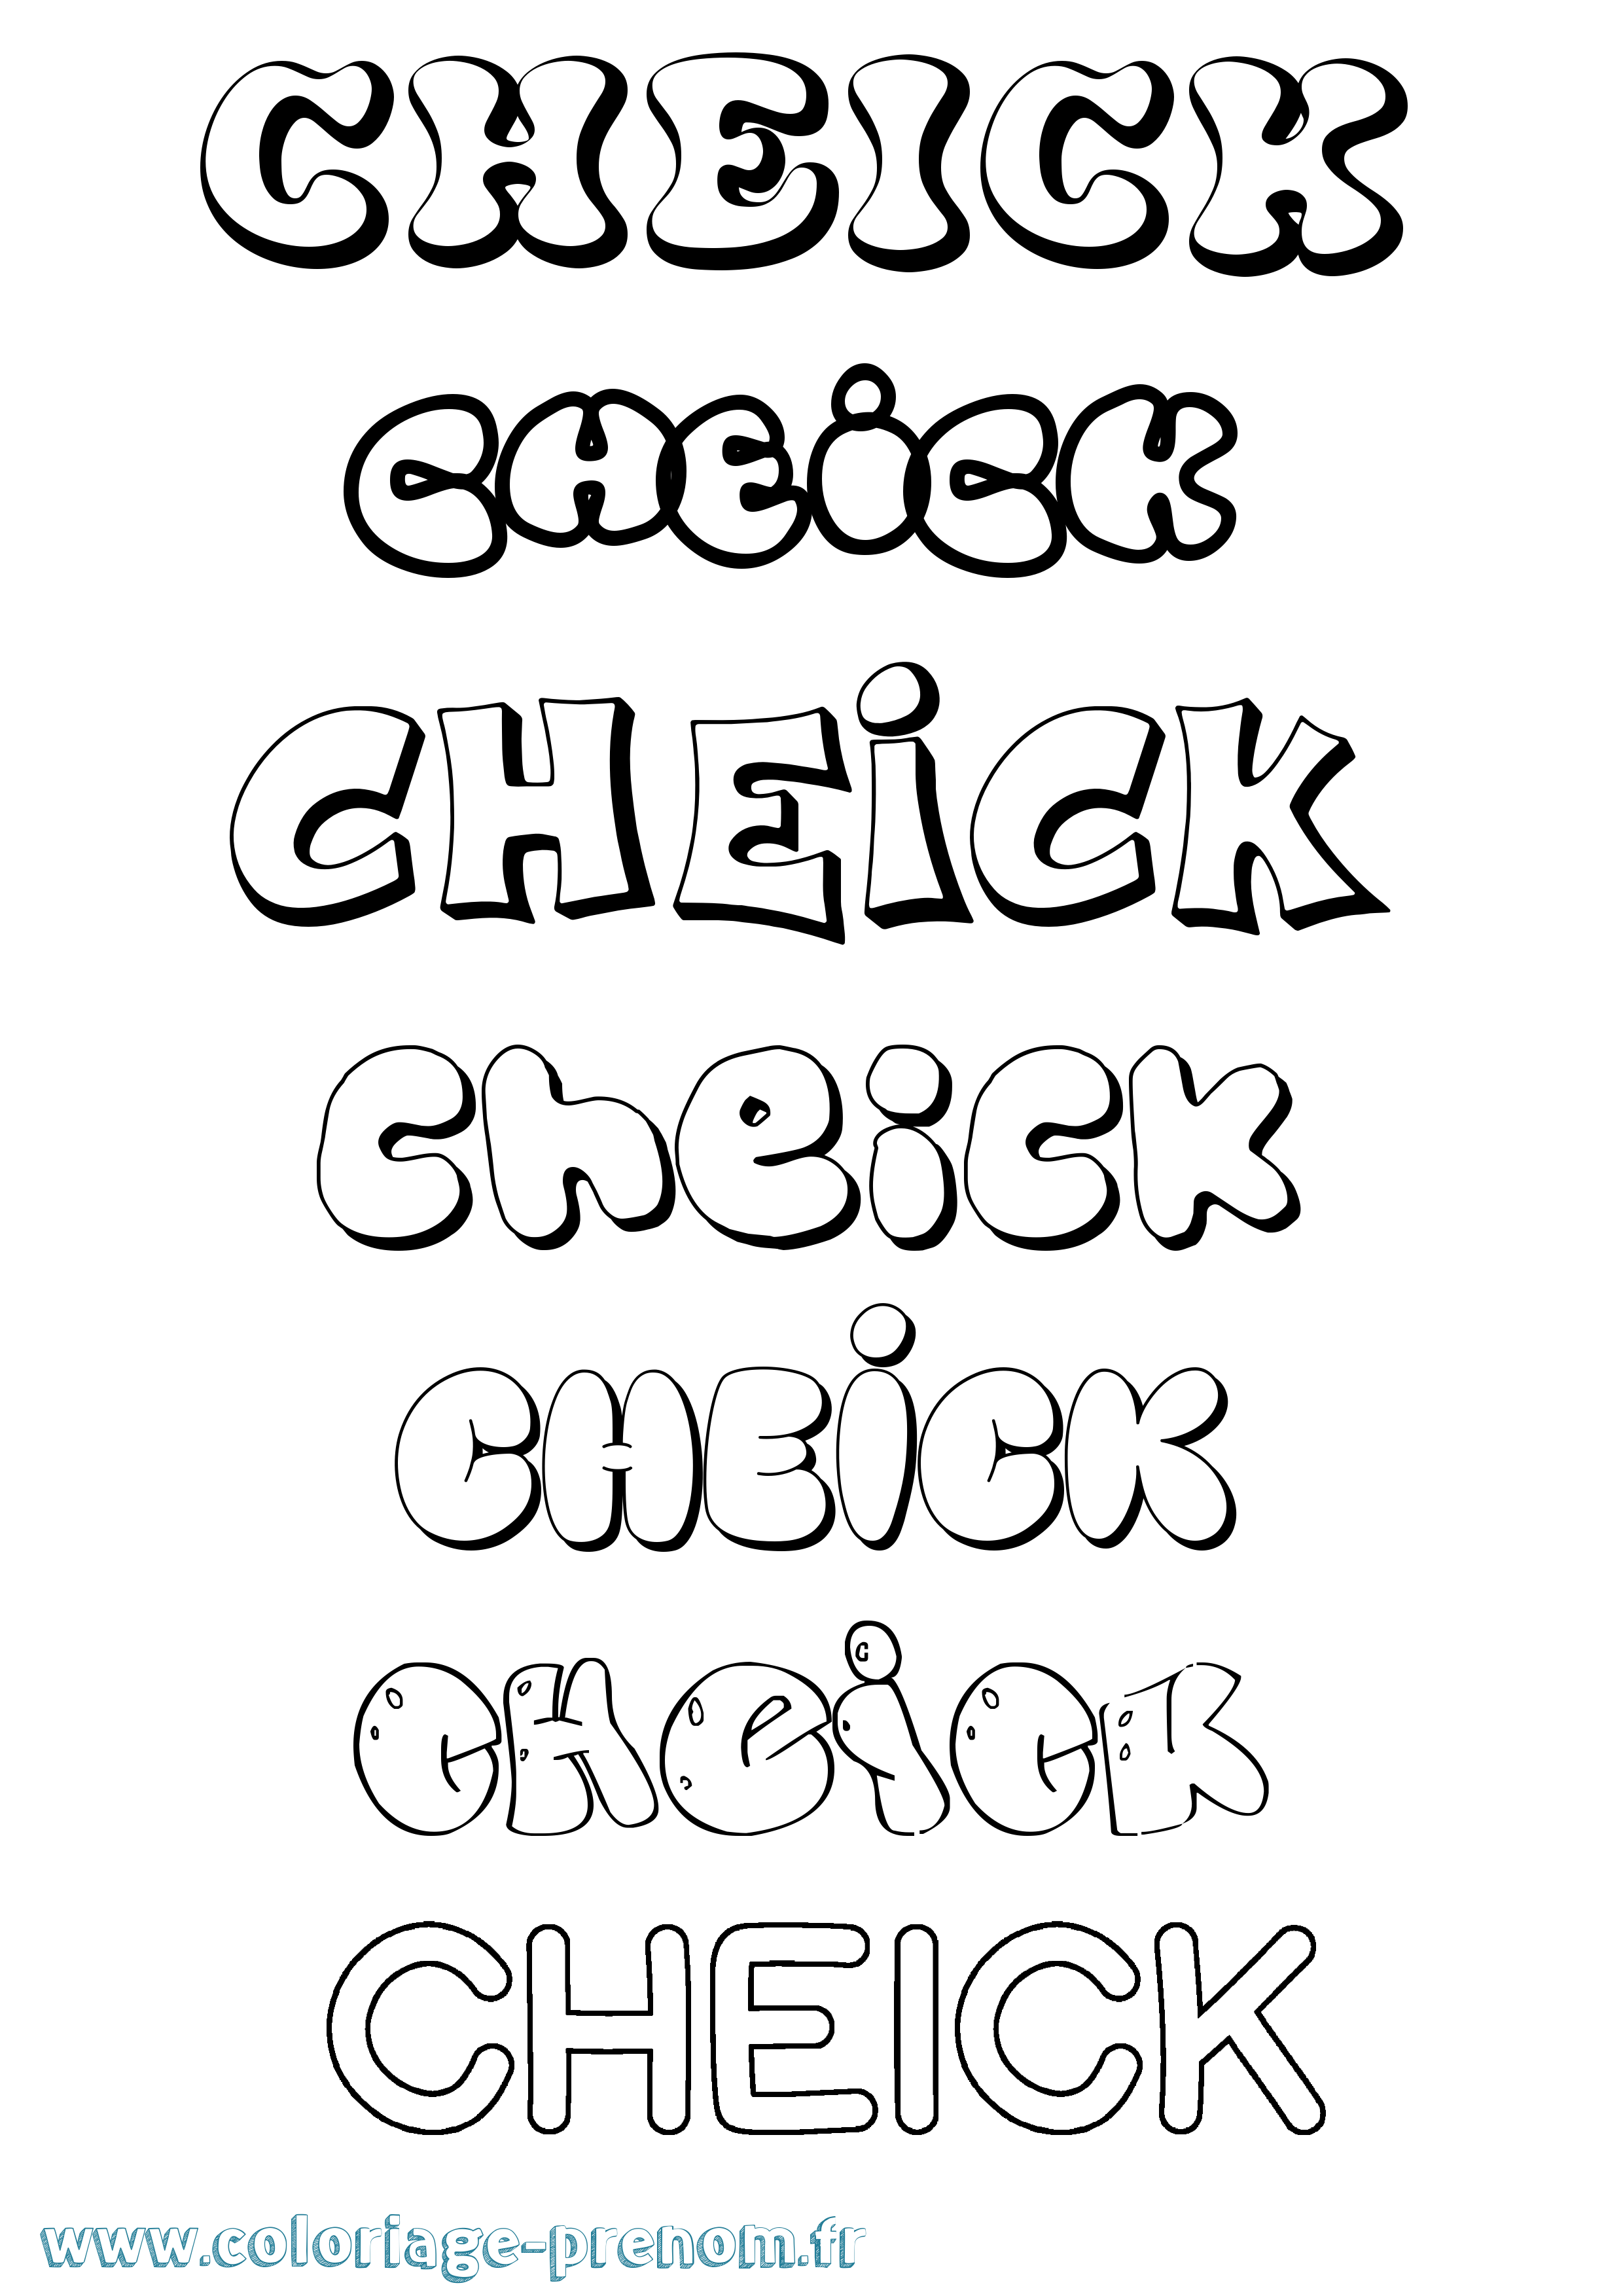 Coloriage prénom Cheick Bubble